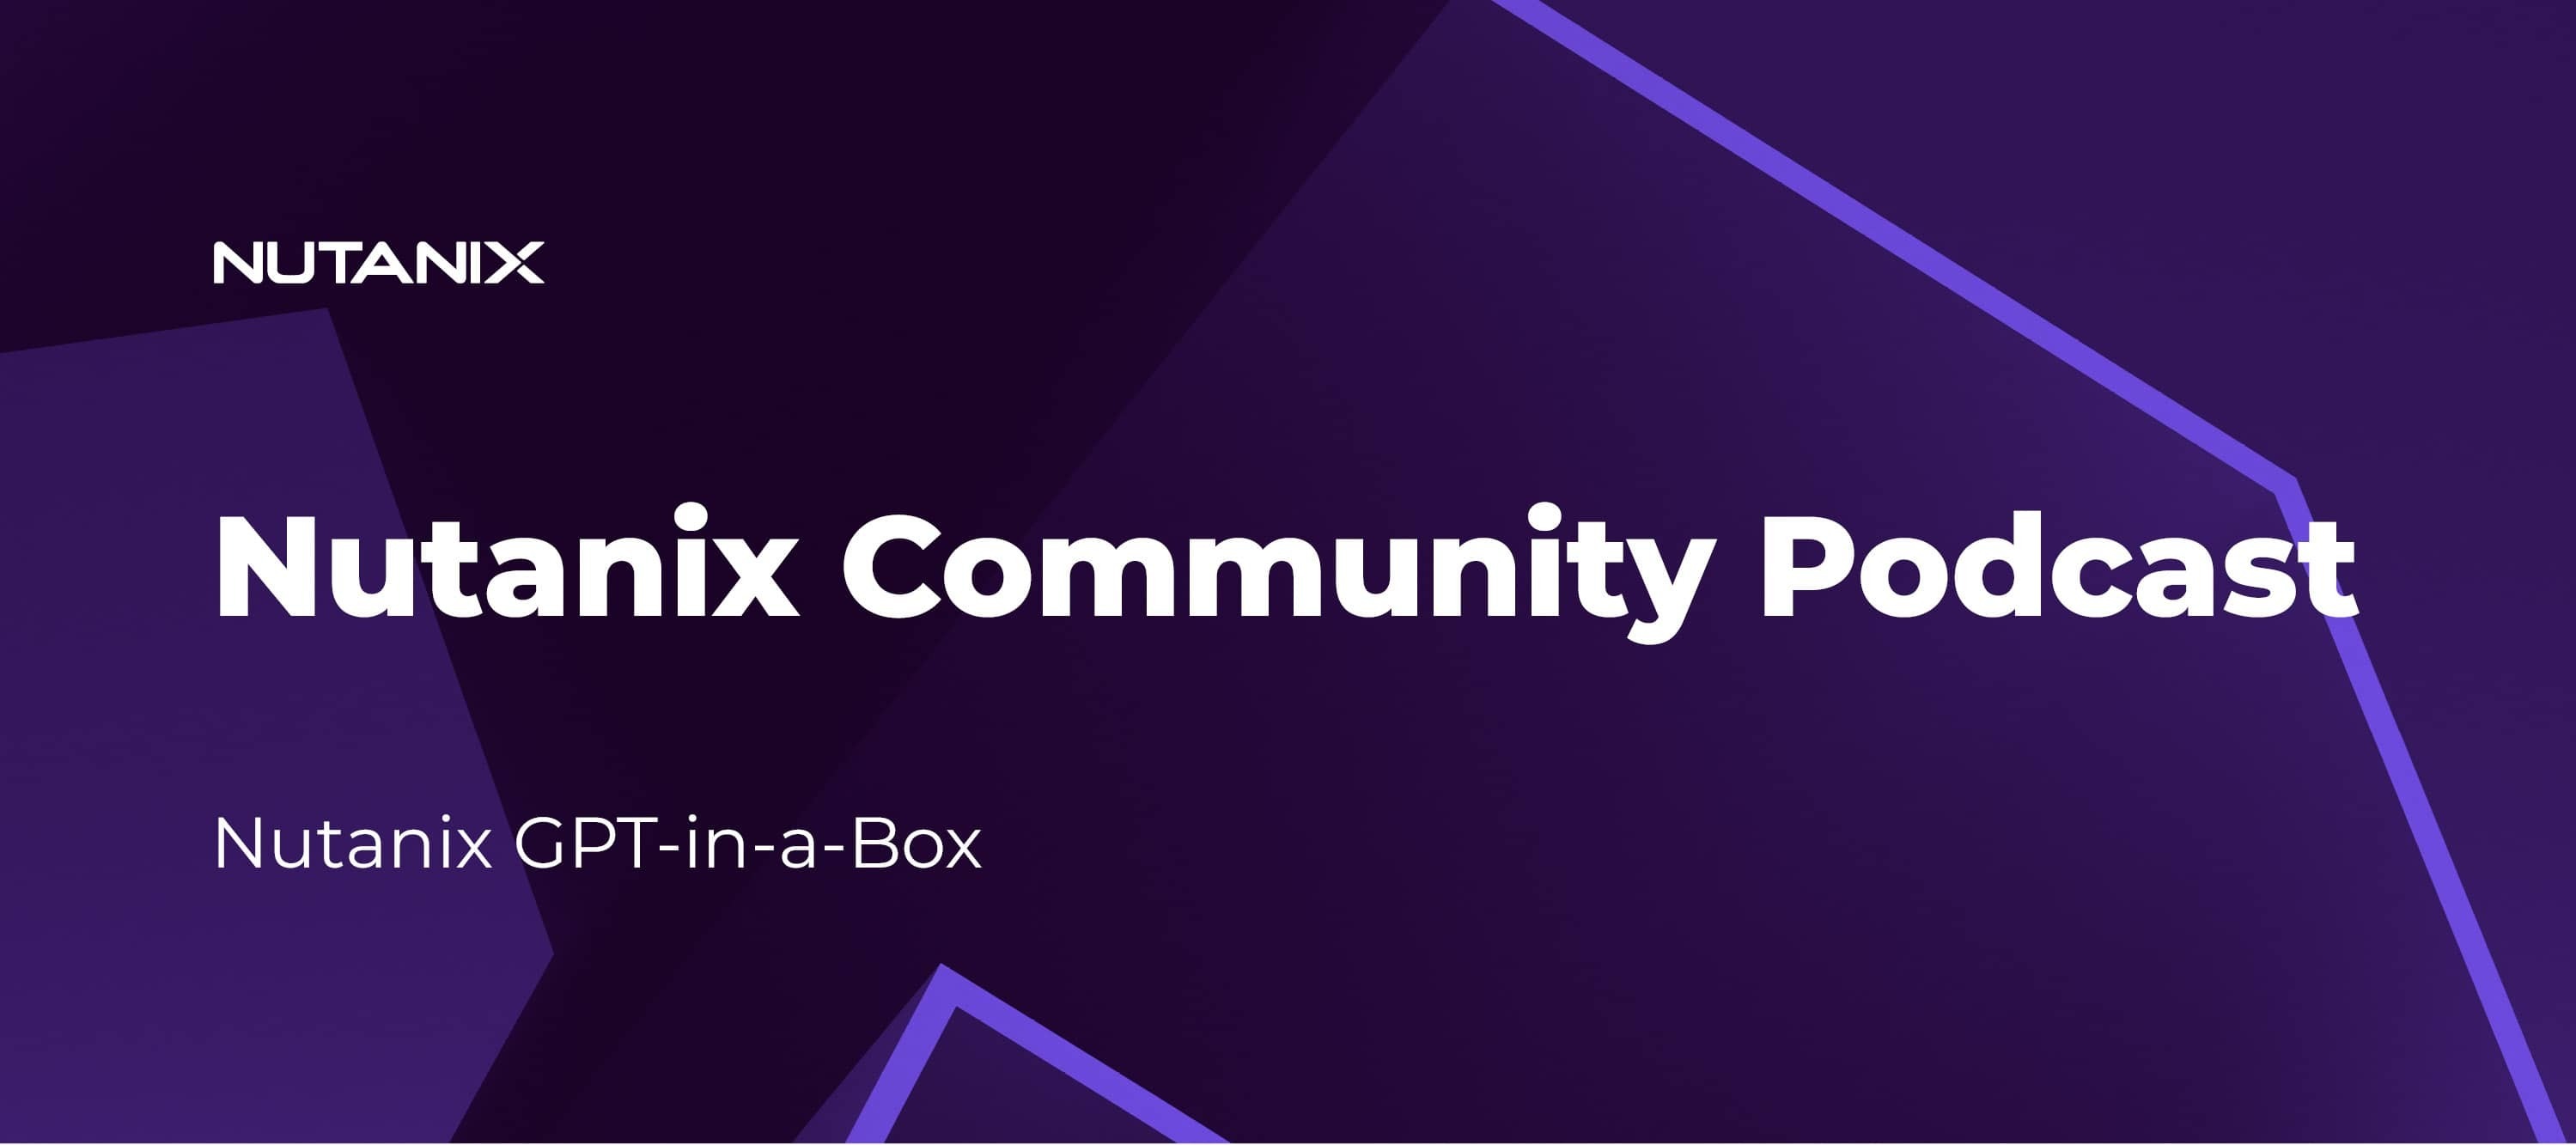 Nutanix Community Podcast: Nutanix GPT-in-a-Box